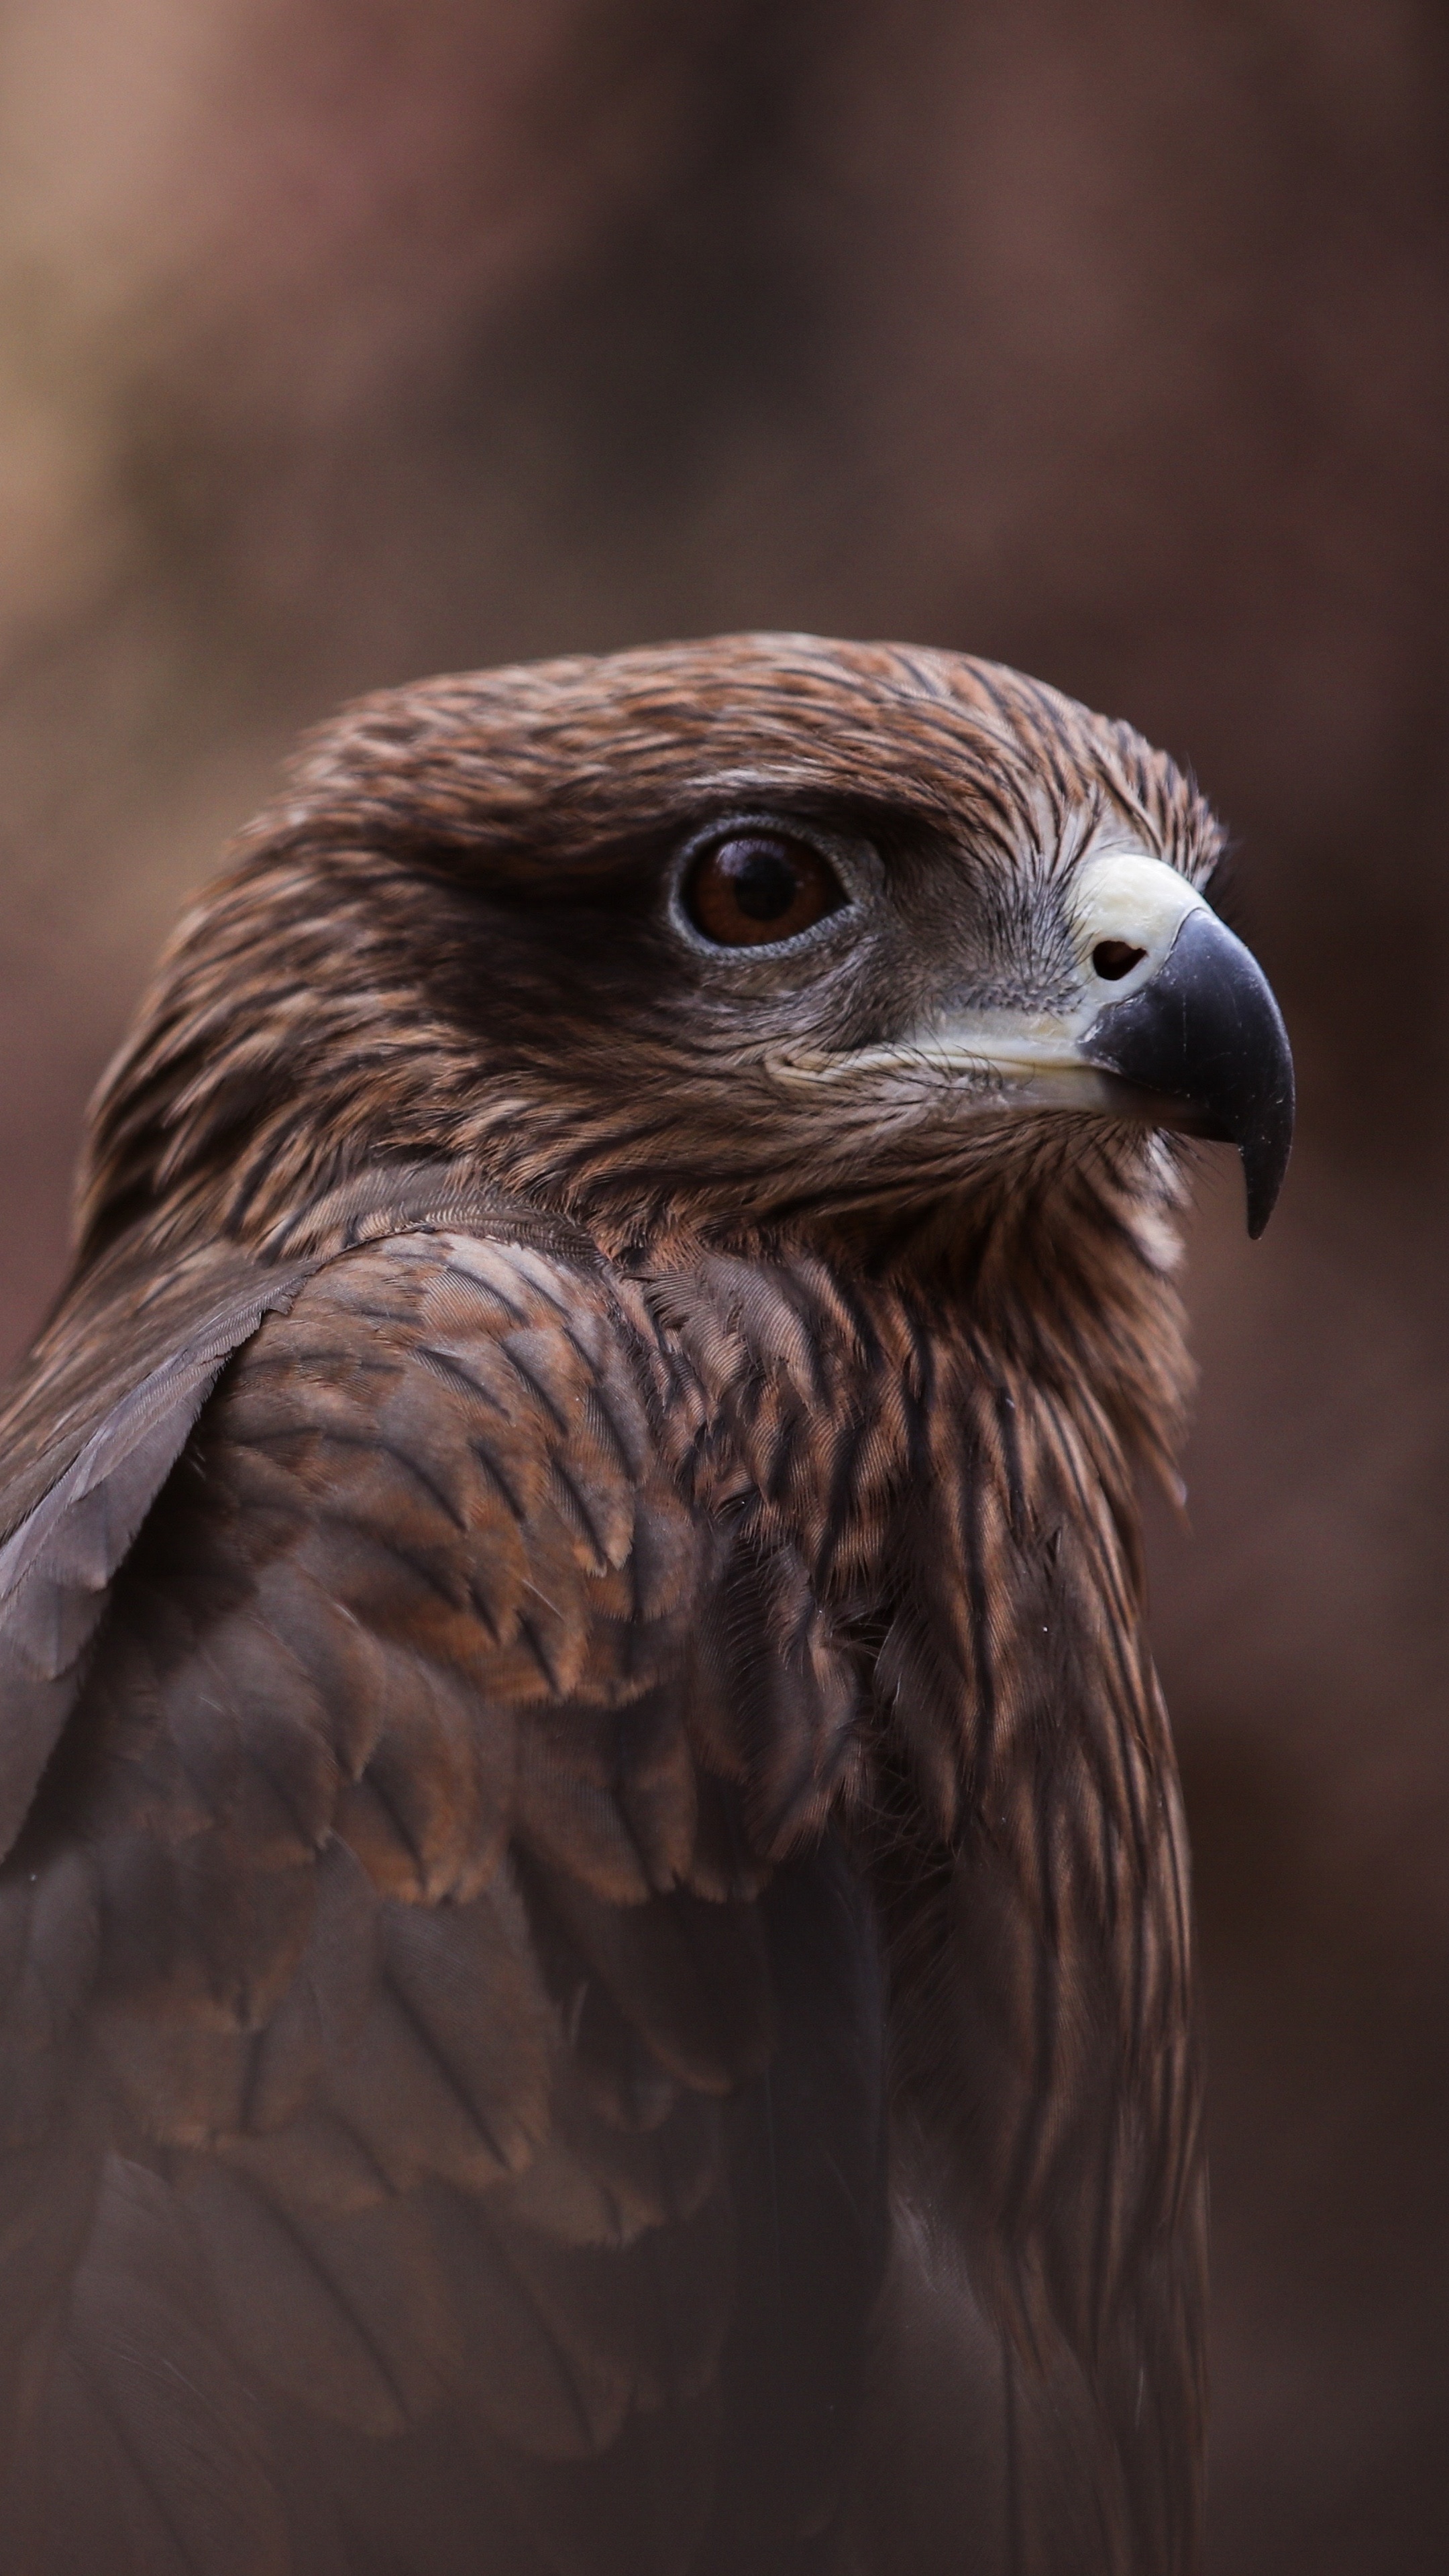 Bird of prey, Hawk wallpaper, 5K Xperia image, 2160x3840 4K Phone